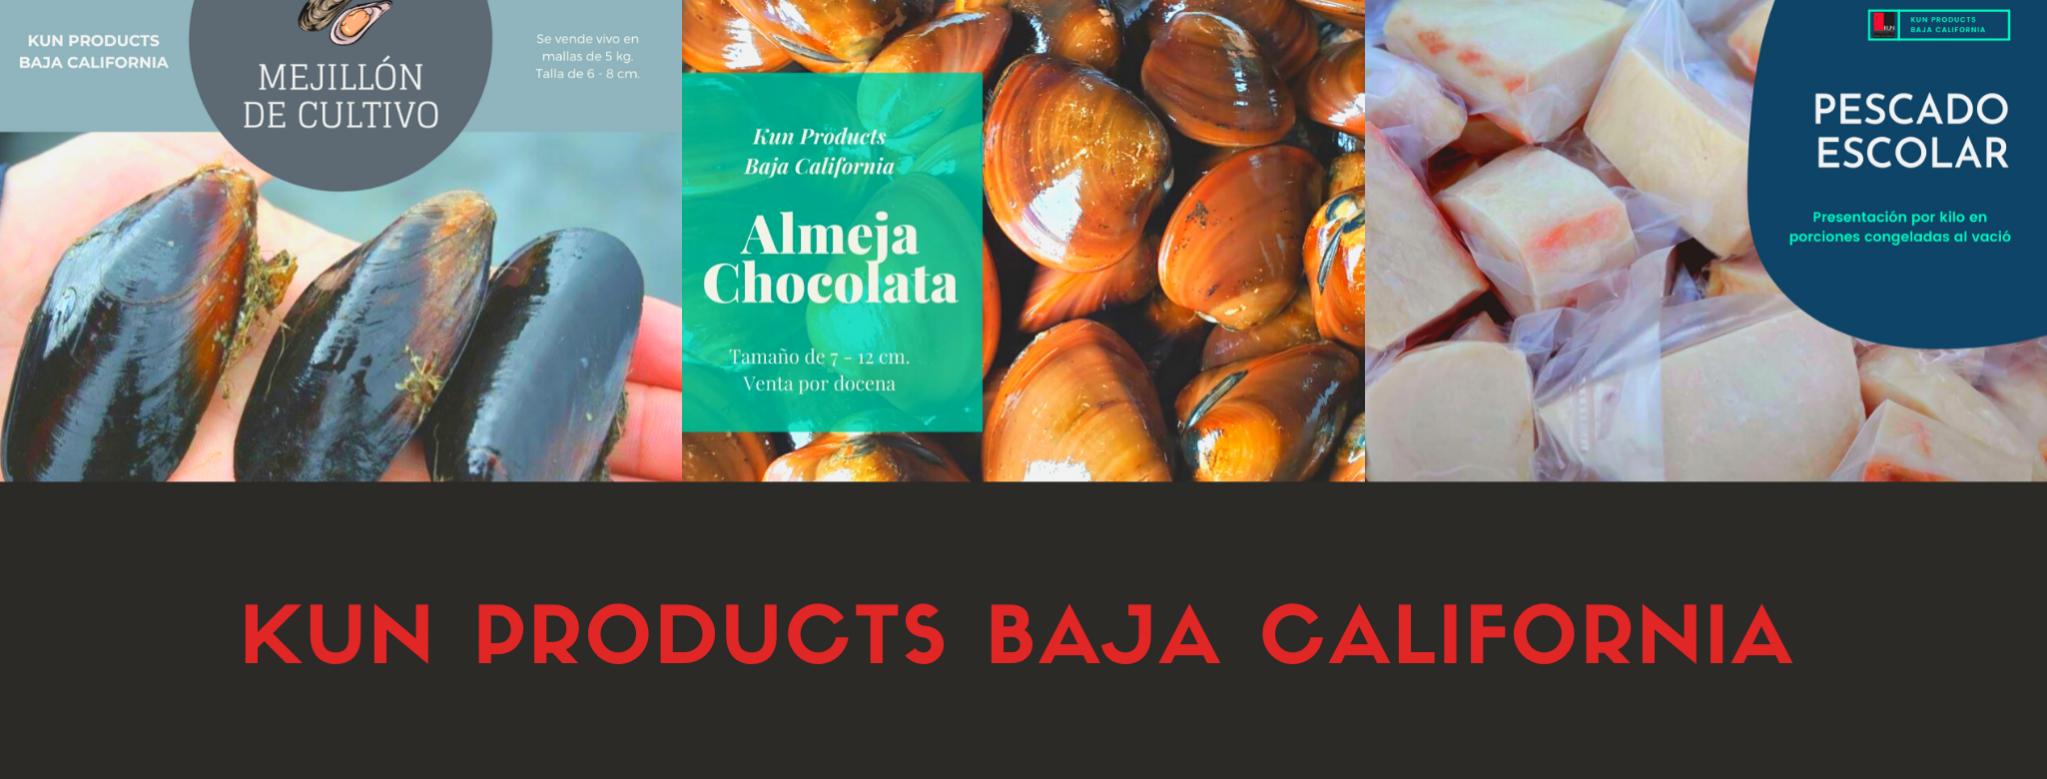 Kun Products Baja California_inicio